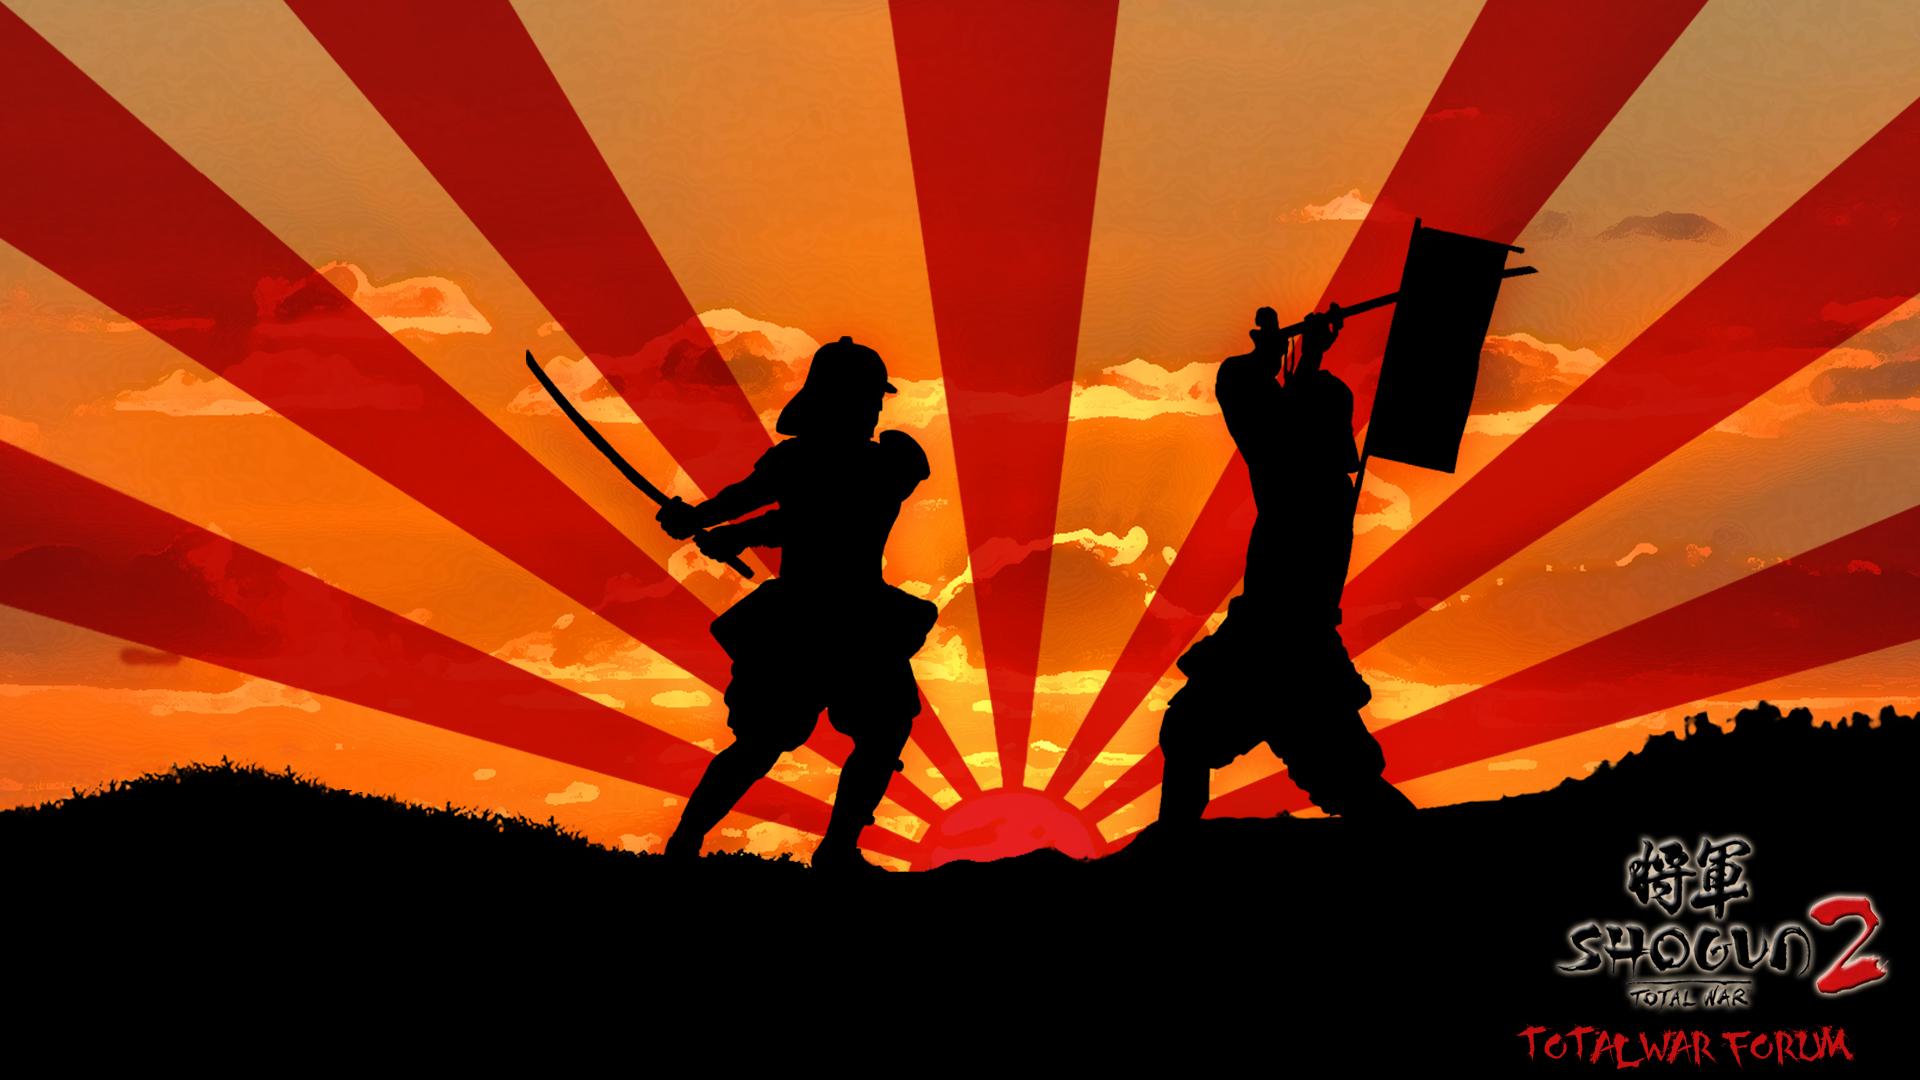 Total War Shogun 2 at 1024 x 1024 iPad size wallpapers HD quality